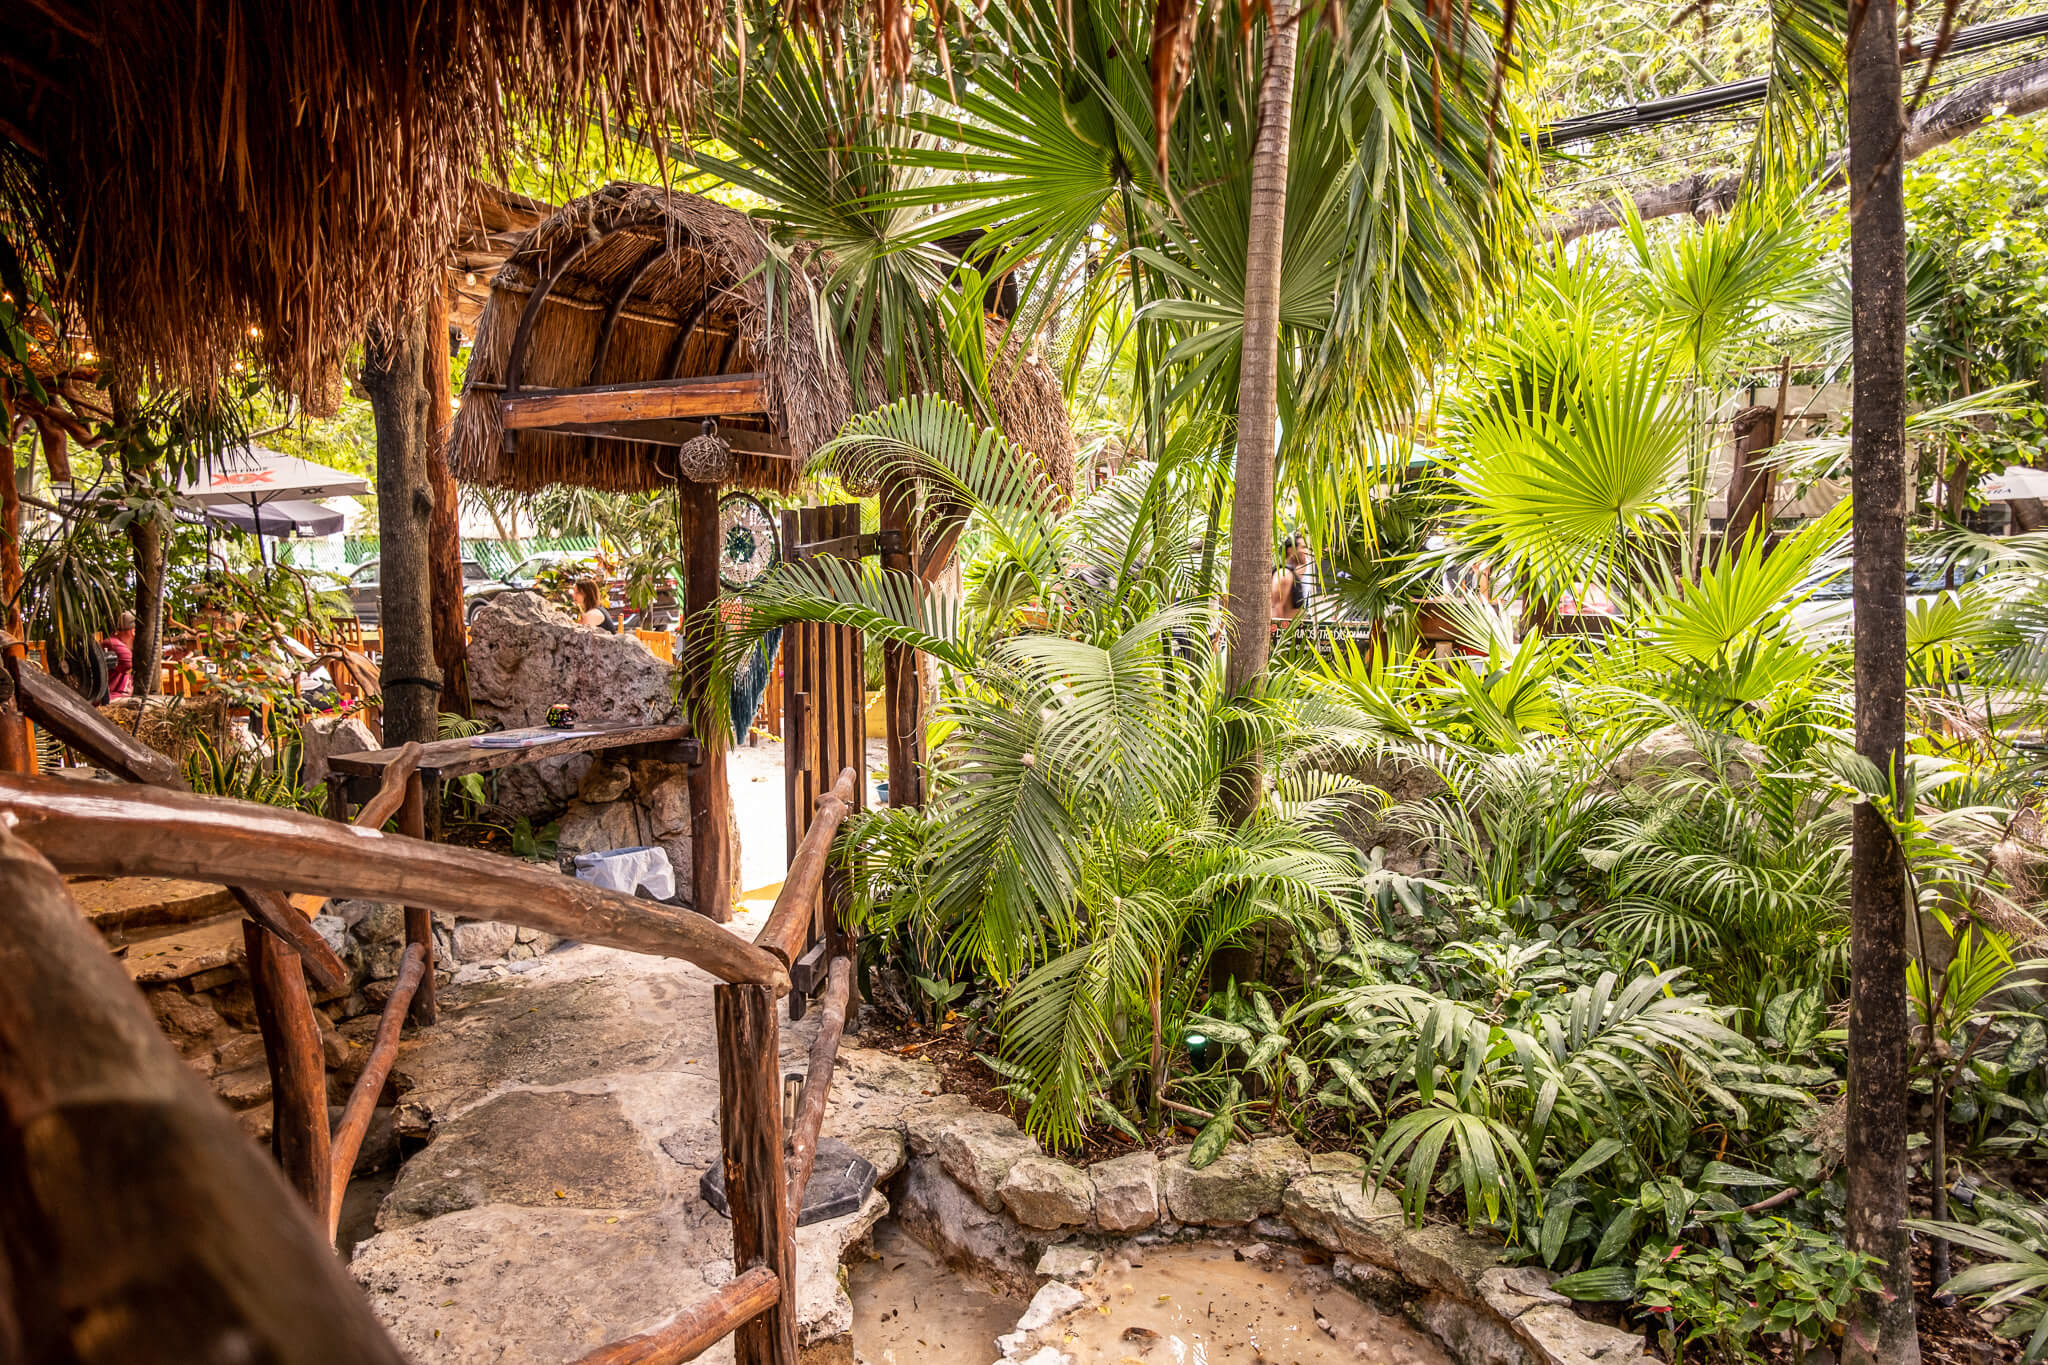 The garden-like interior of La Perla Pixan restaurant in Playa del Carmen